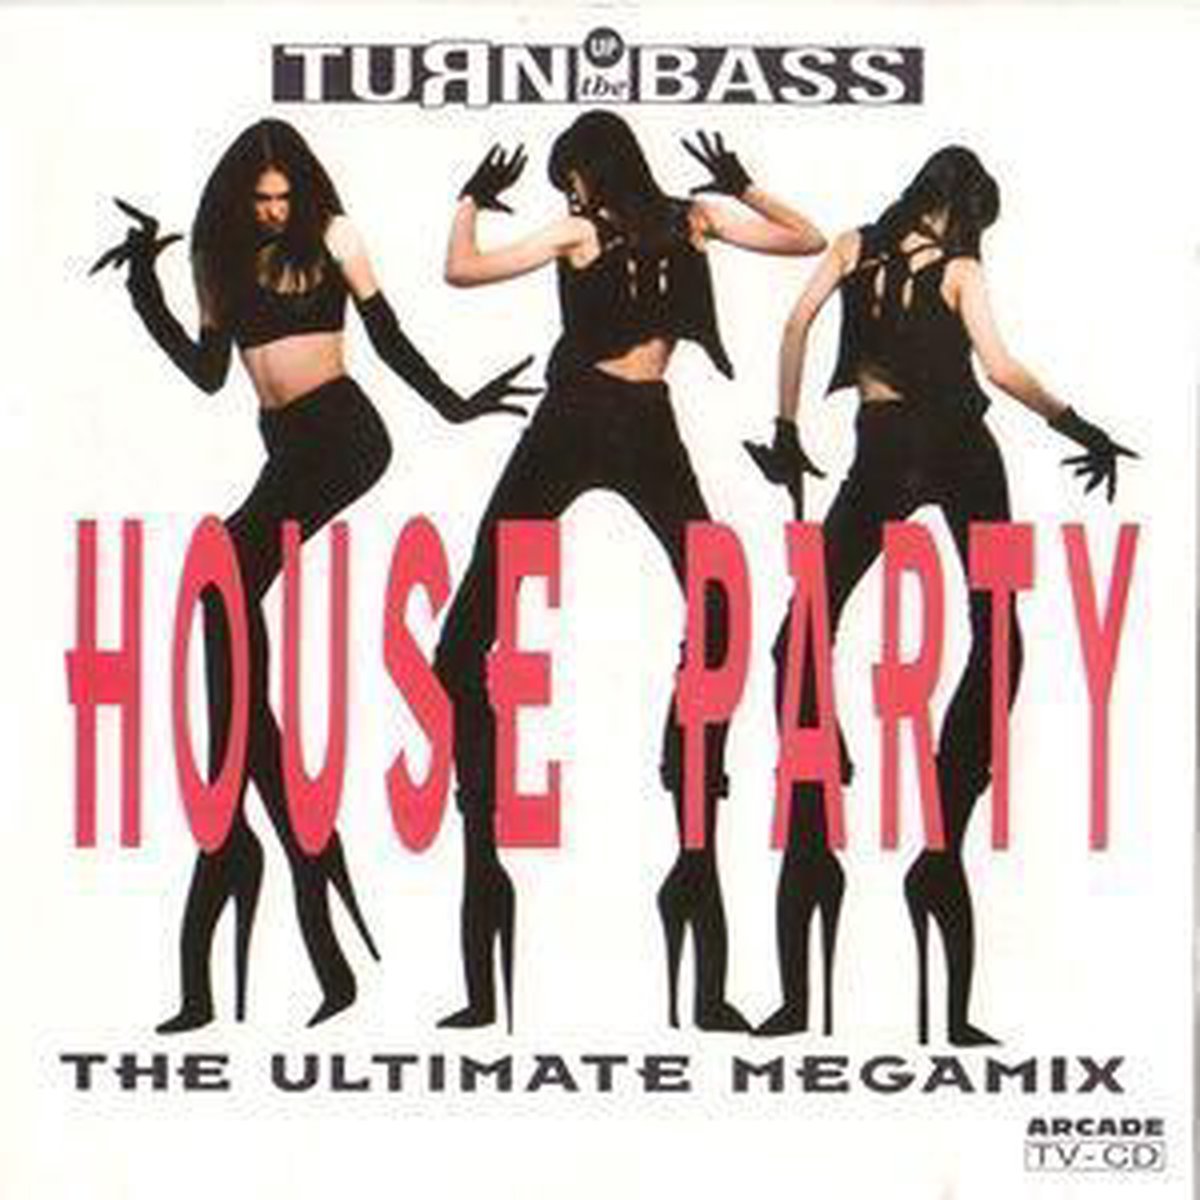 Mange farlige situationer par rolige Turn up the bass - House Party - The Ultimate megamix, various artists | CD  (album) |... | bol.com